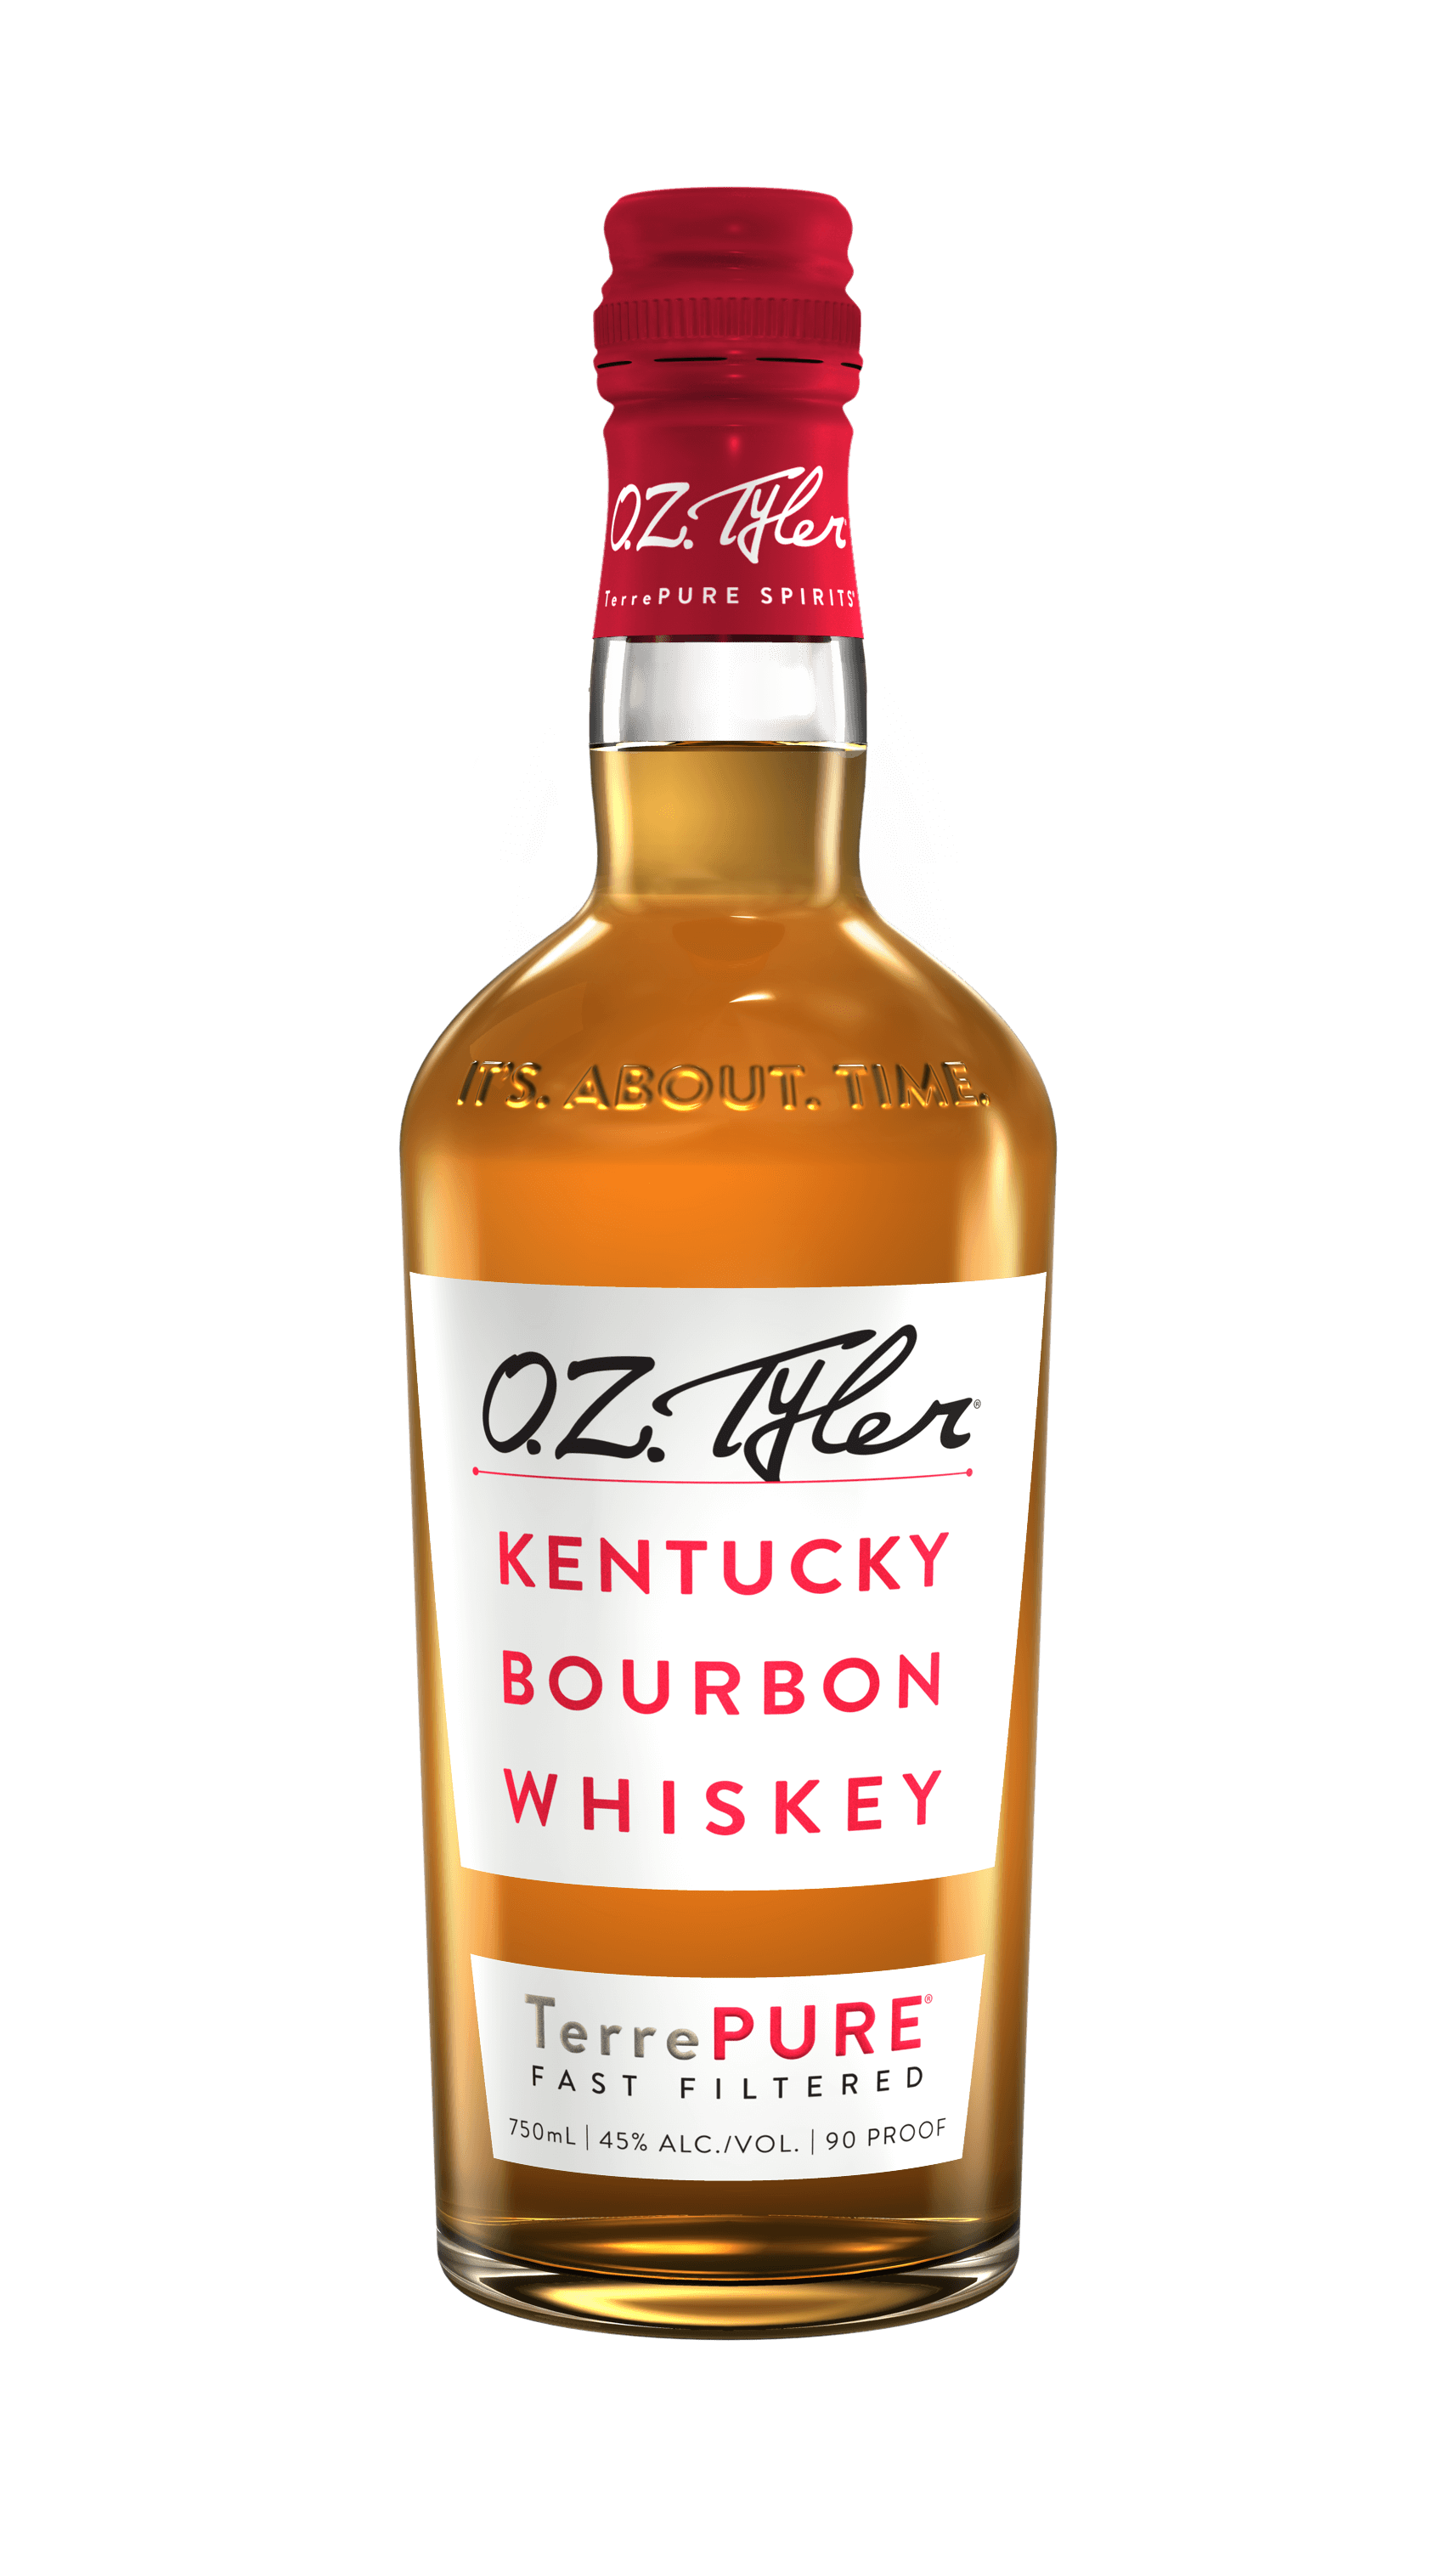 oz tyler bourbon - O.Z. Tyler Distillery Releases First Production Kentucky Bourbon Whiskey